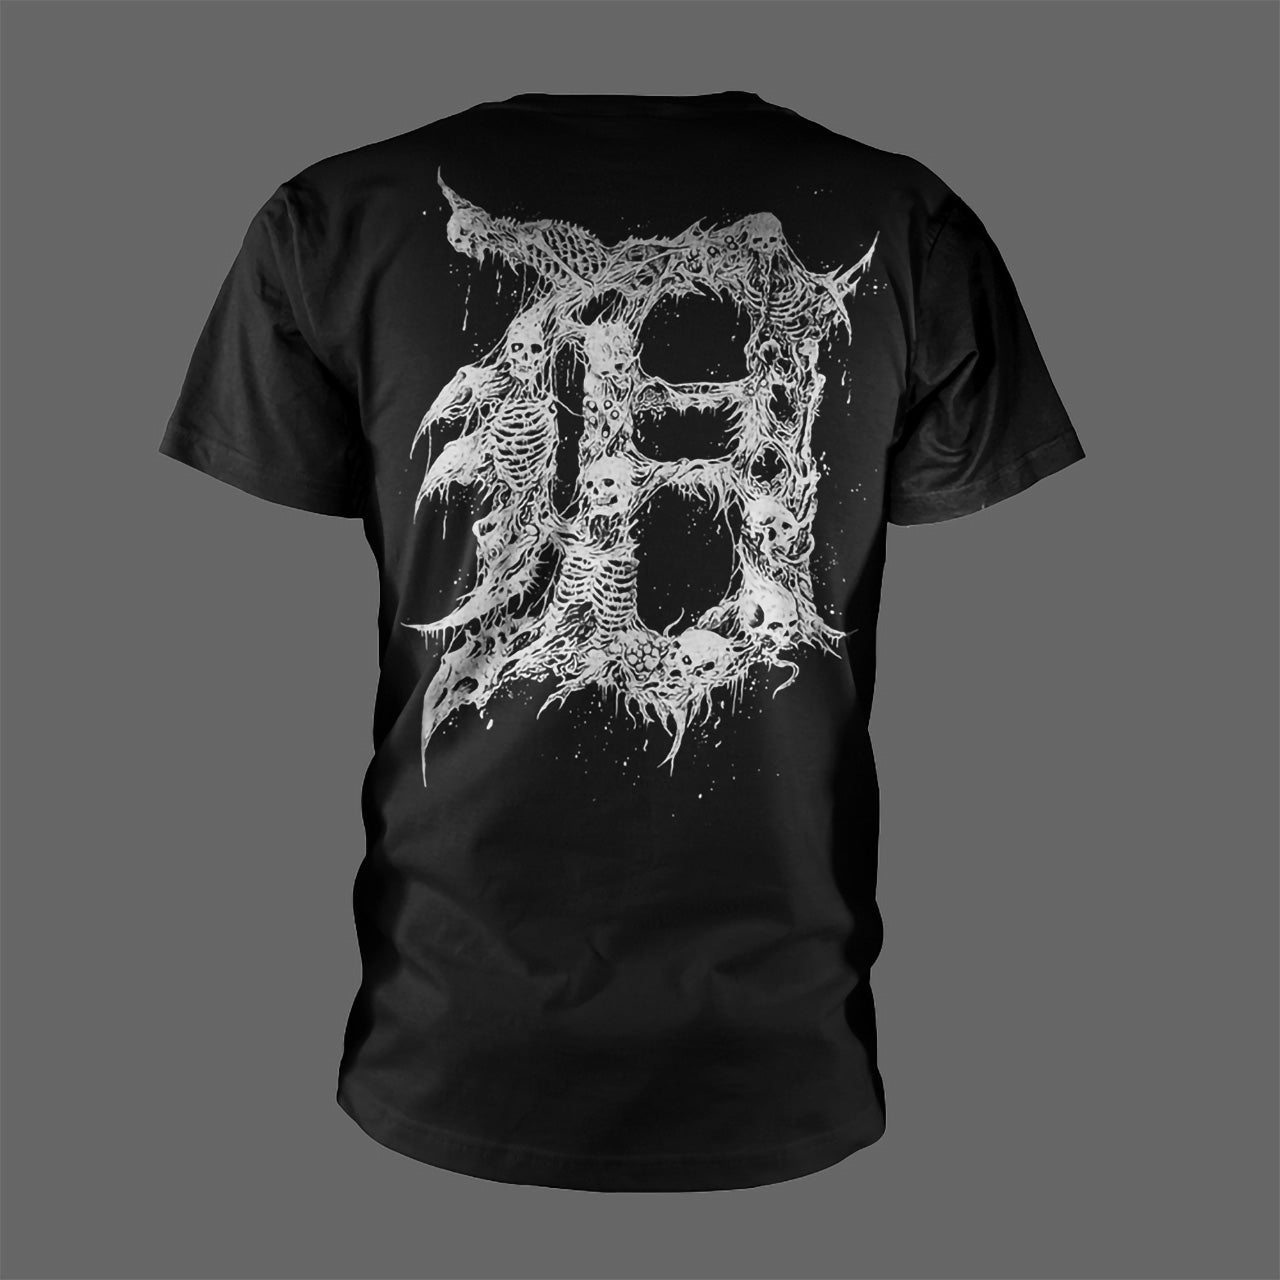 The Black Dahlia Murder - Logo / Detroit (T-Shirt)